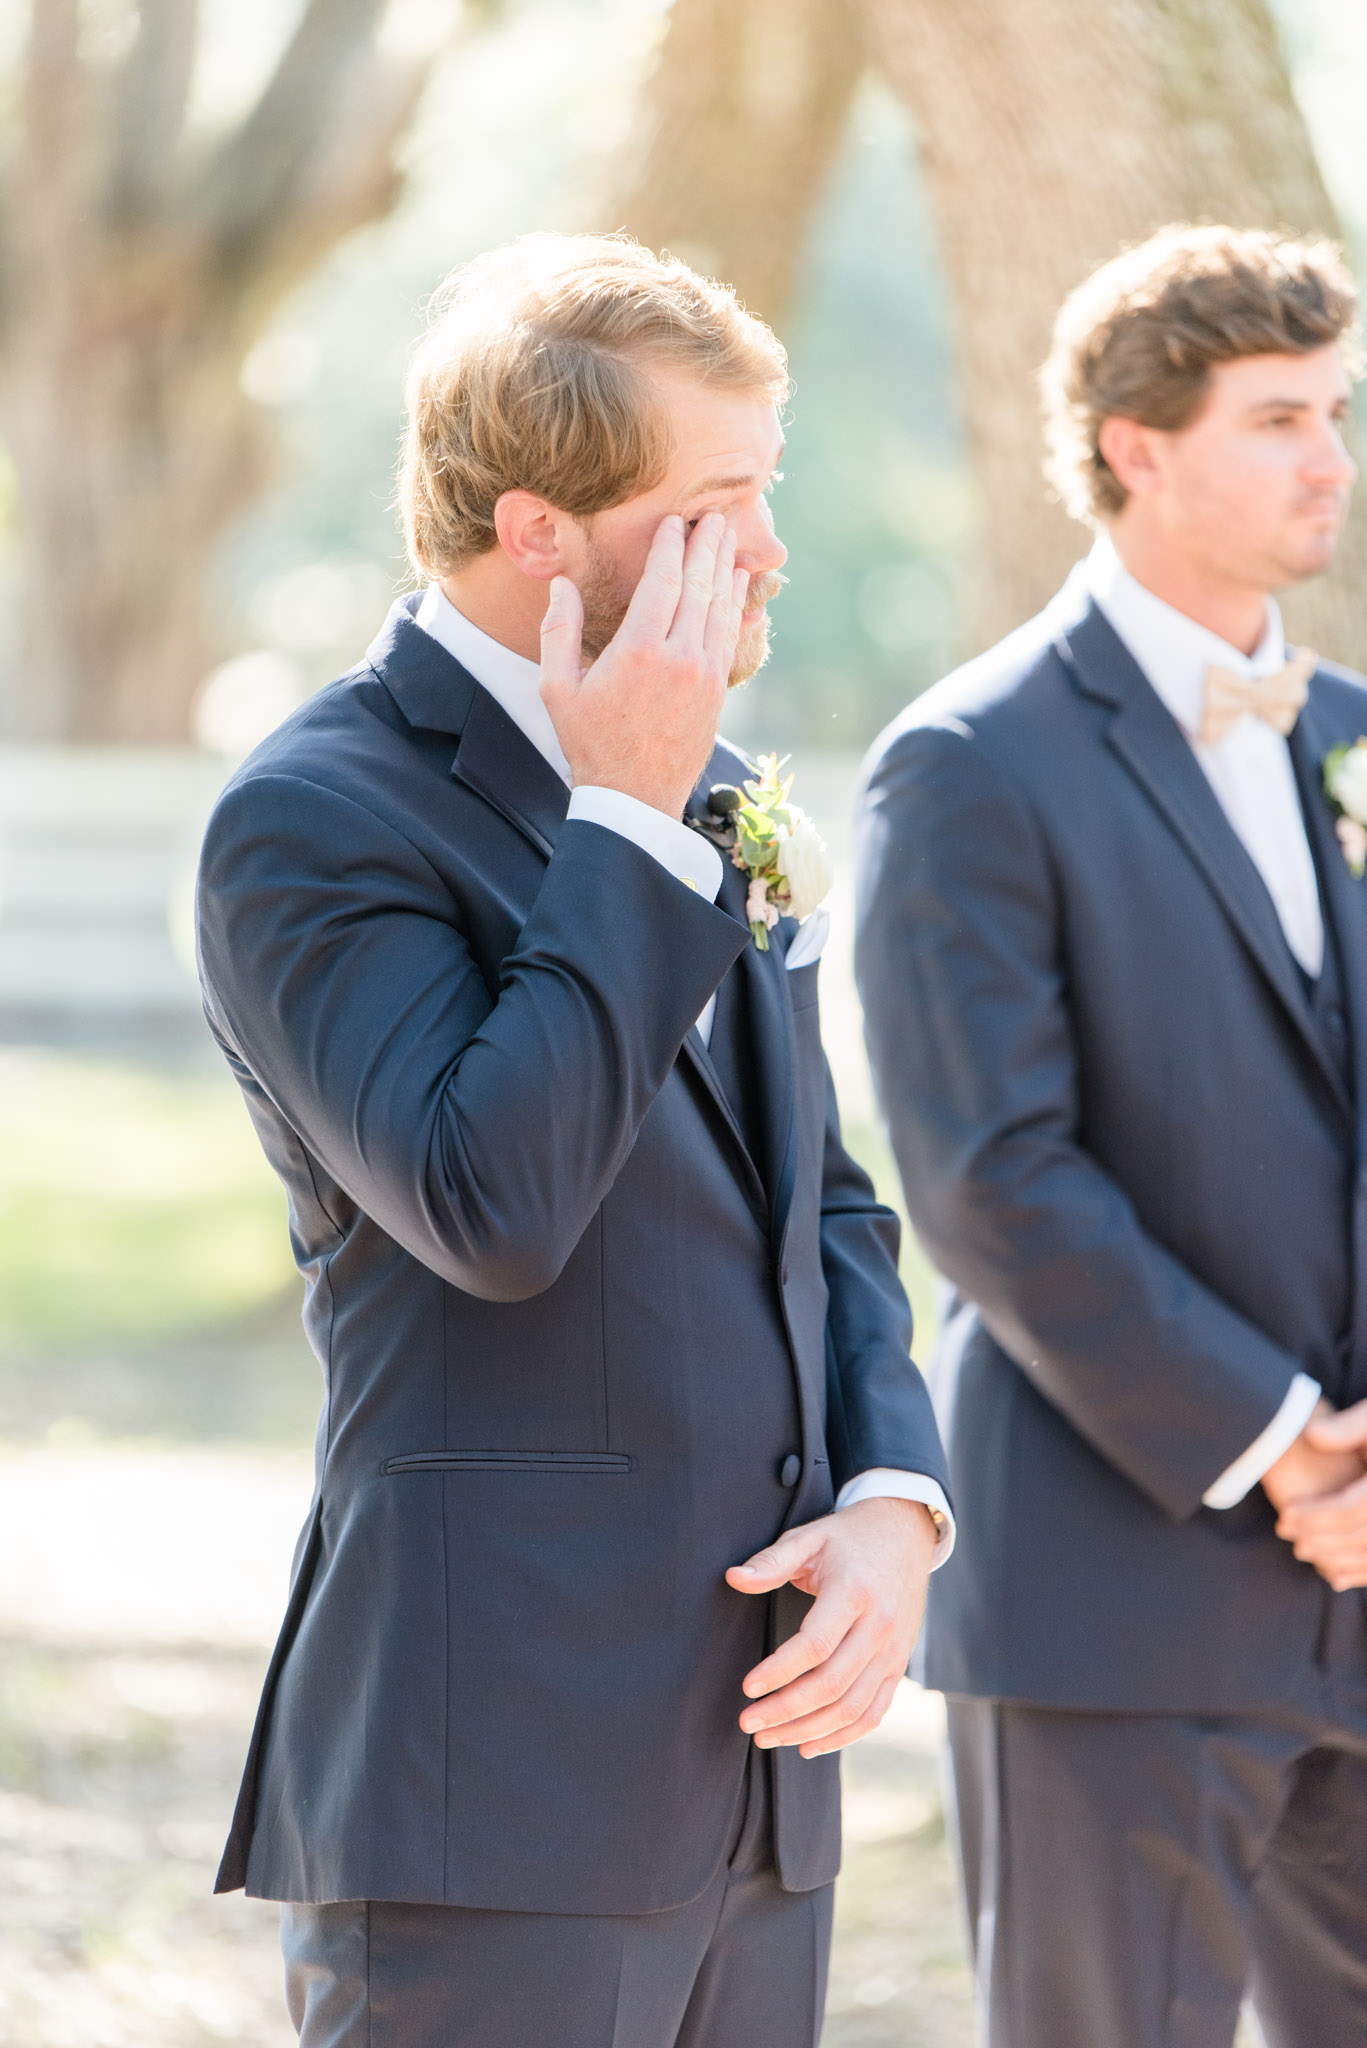 Groom cries as bride comes down aisle.